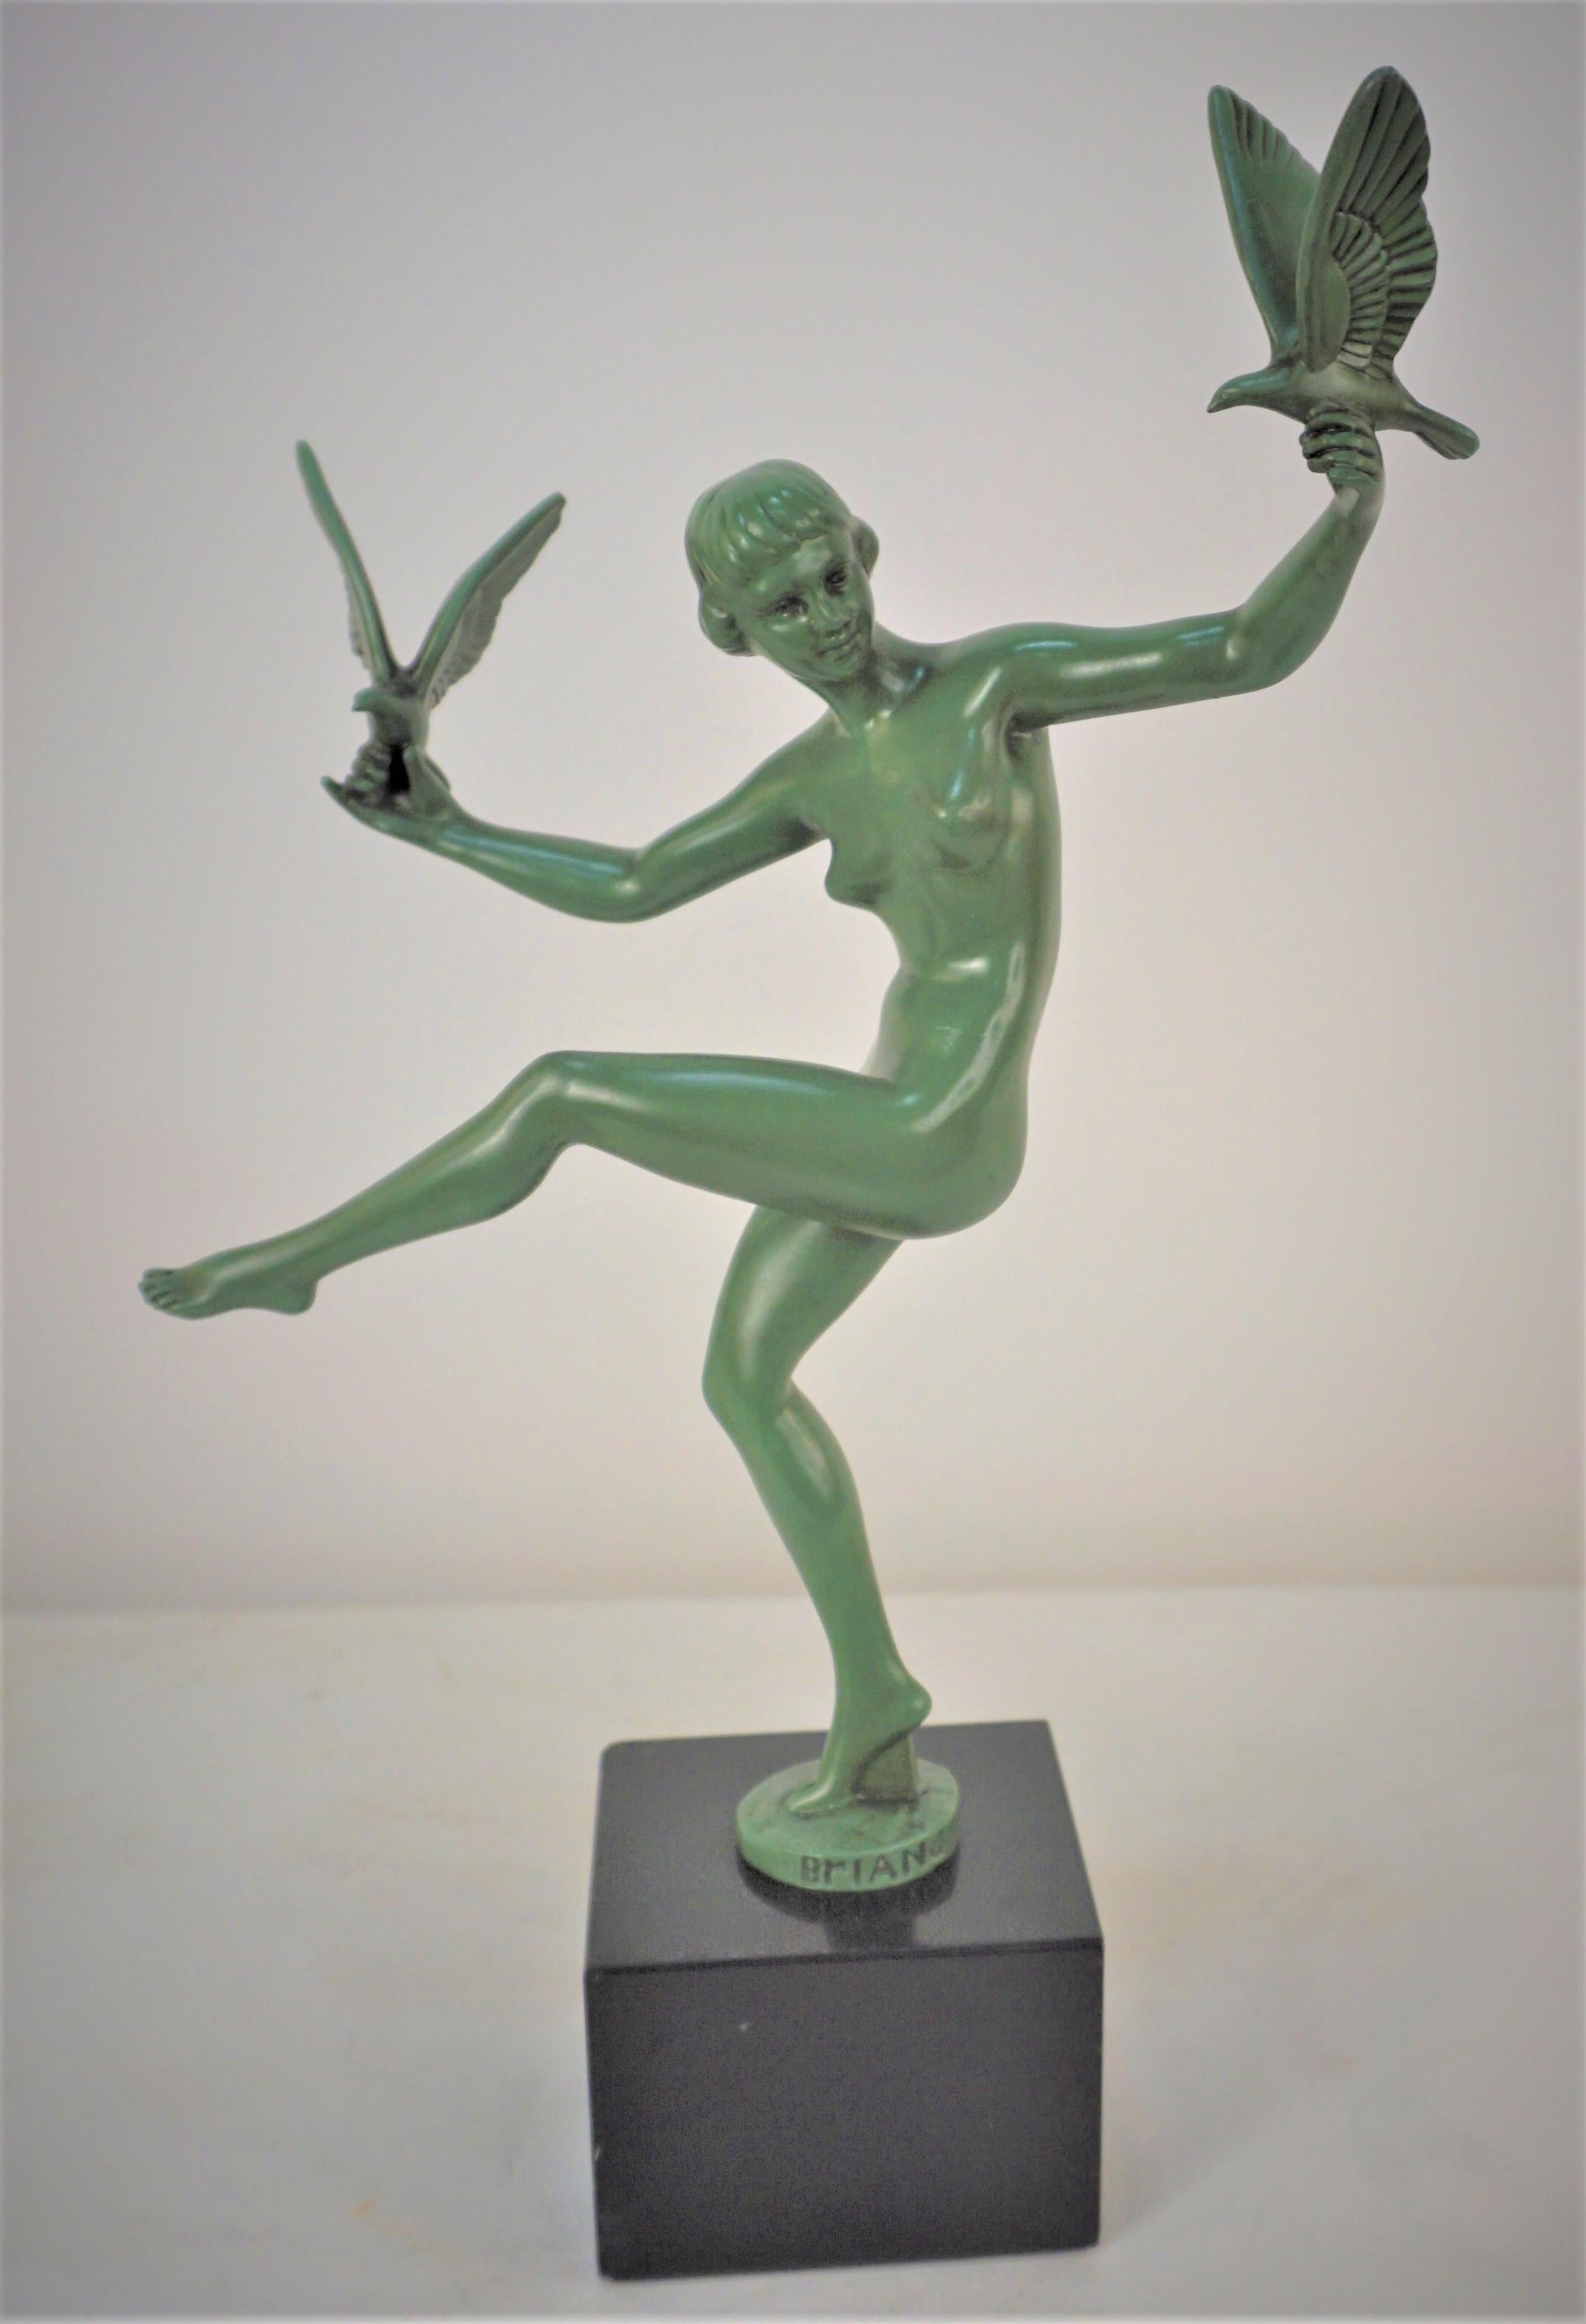 M. Bouraine (Briand) Le Max Verrier Art Deco Sculpture Nude Dancer with Birds 1